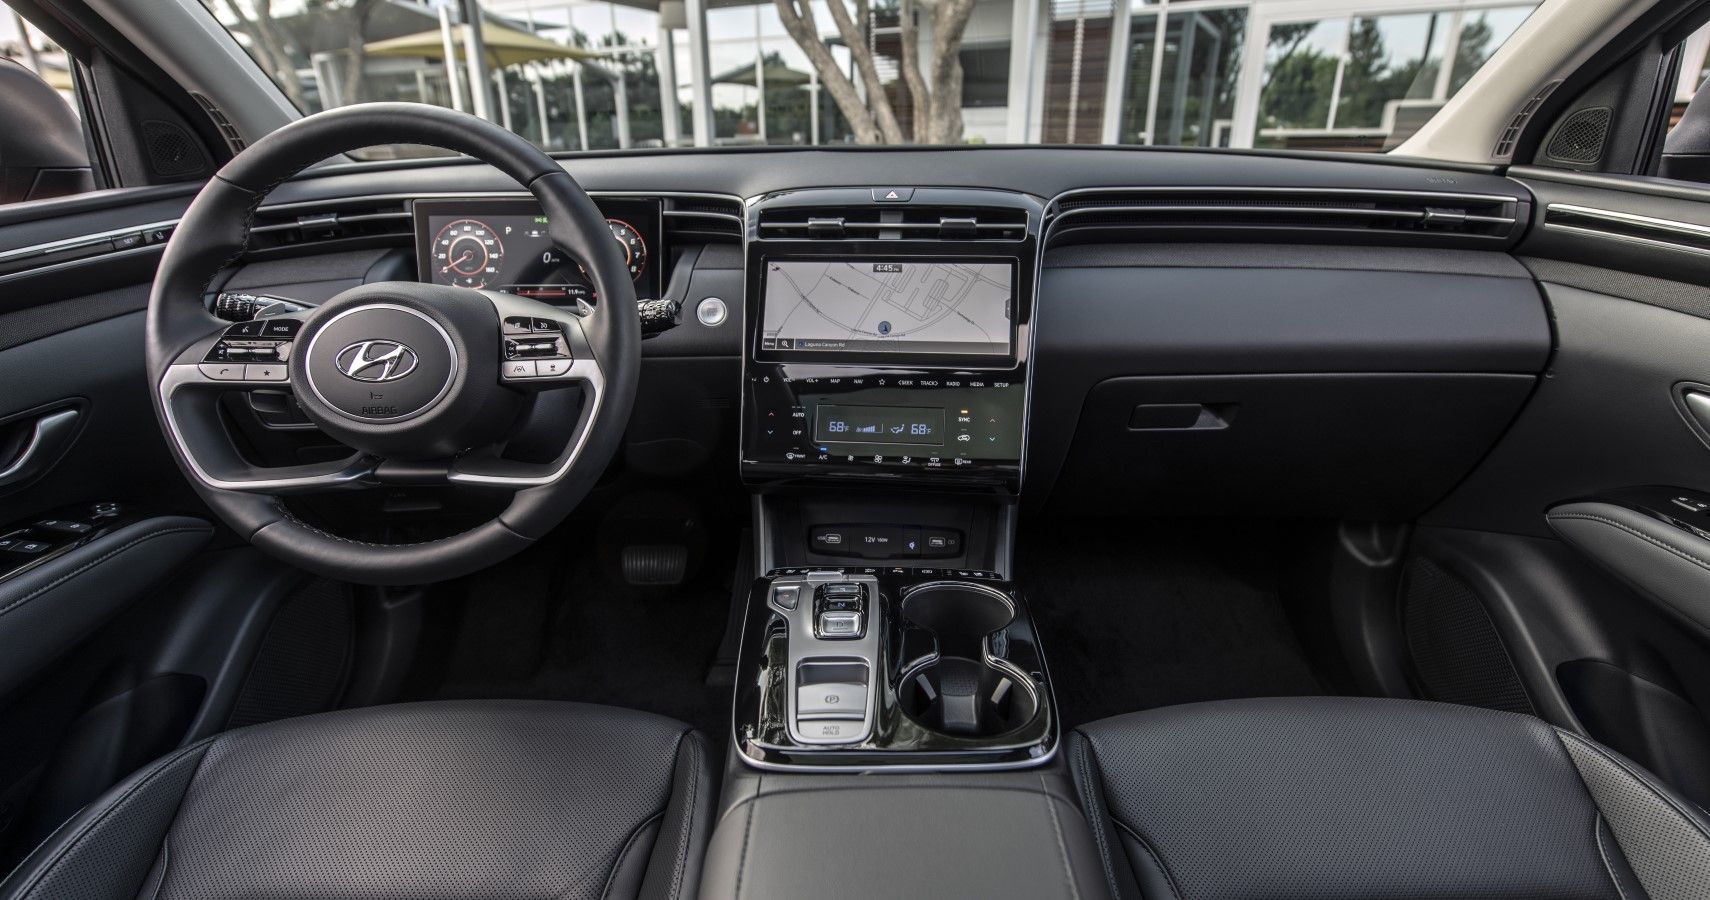 2022 Hyundai Tucson has a plush dashbaord loaded with screens